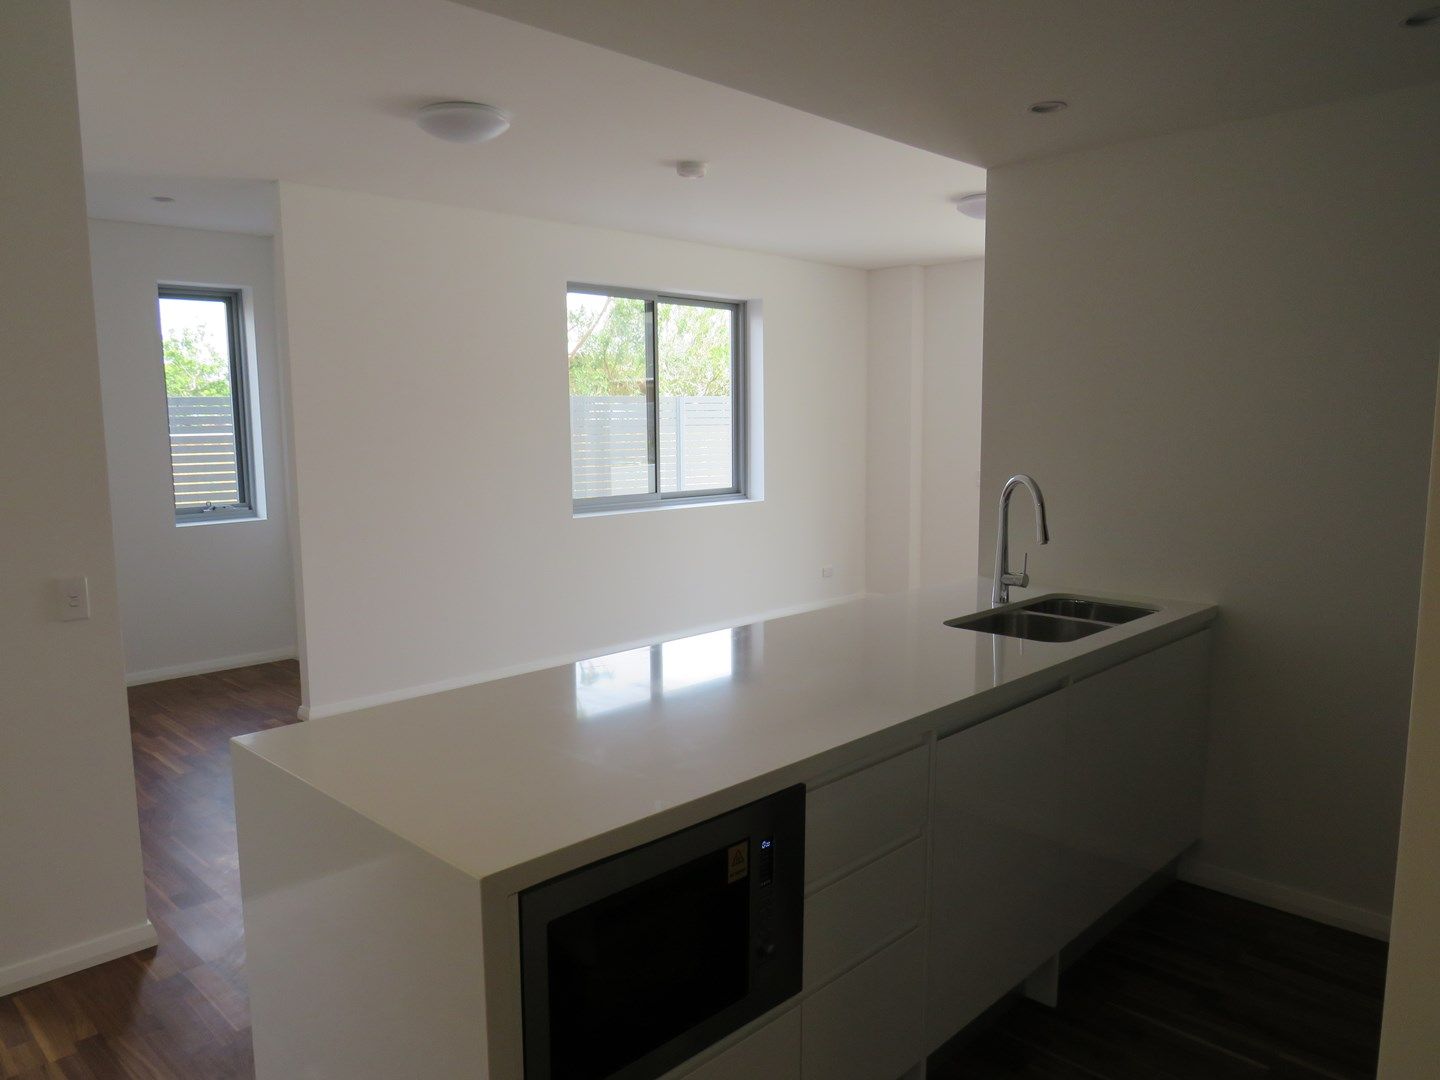 2 bedrooms Apartment / Unit / Flat in G12/1 Victoria Street ASHFIELD NSW, 2131